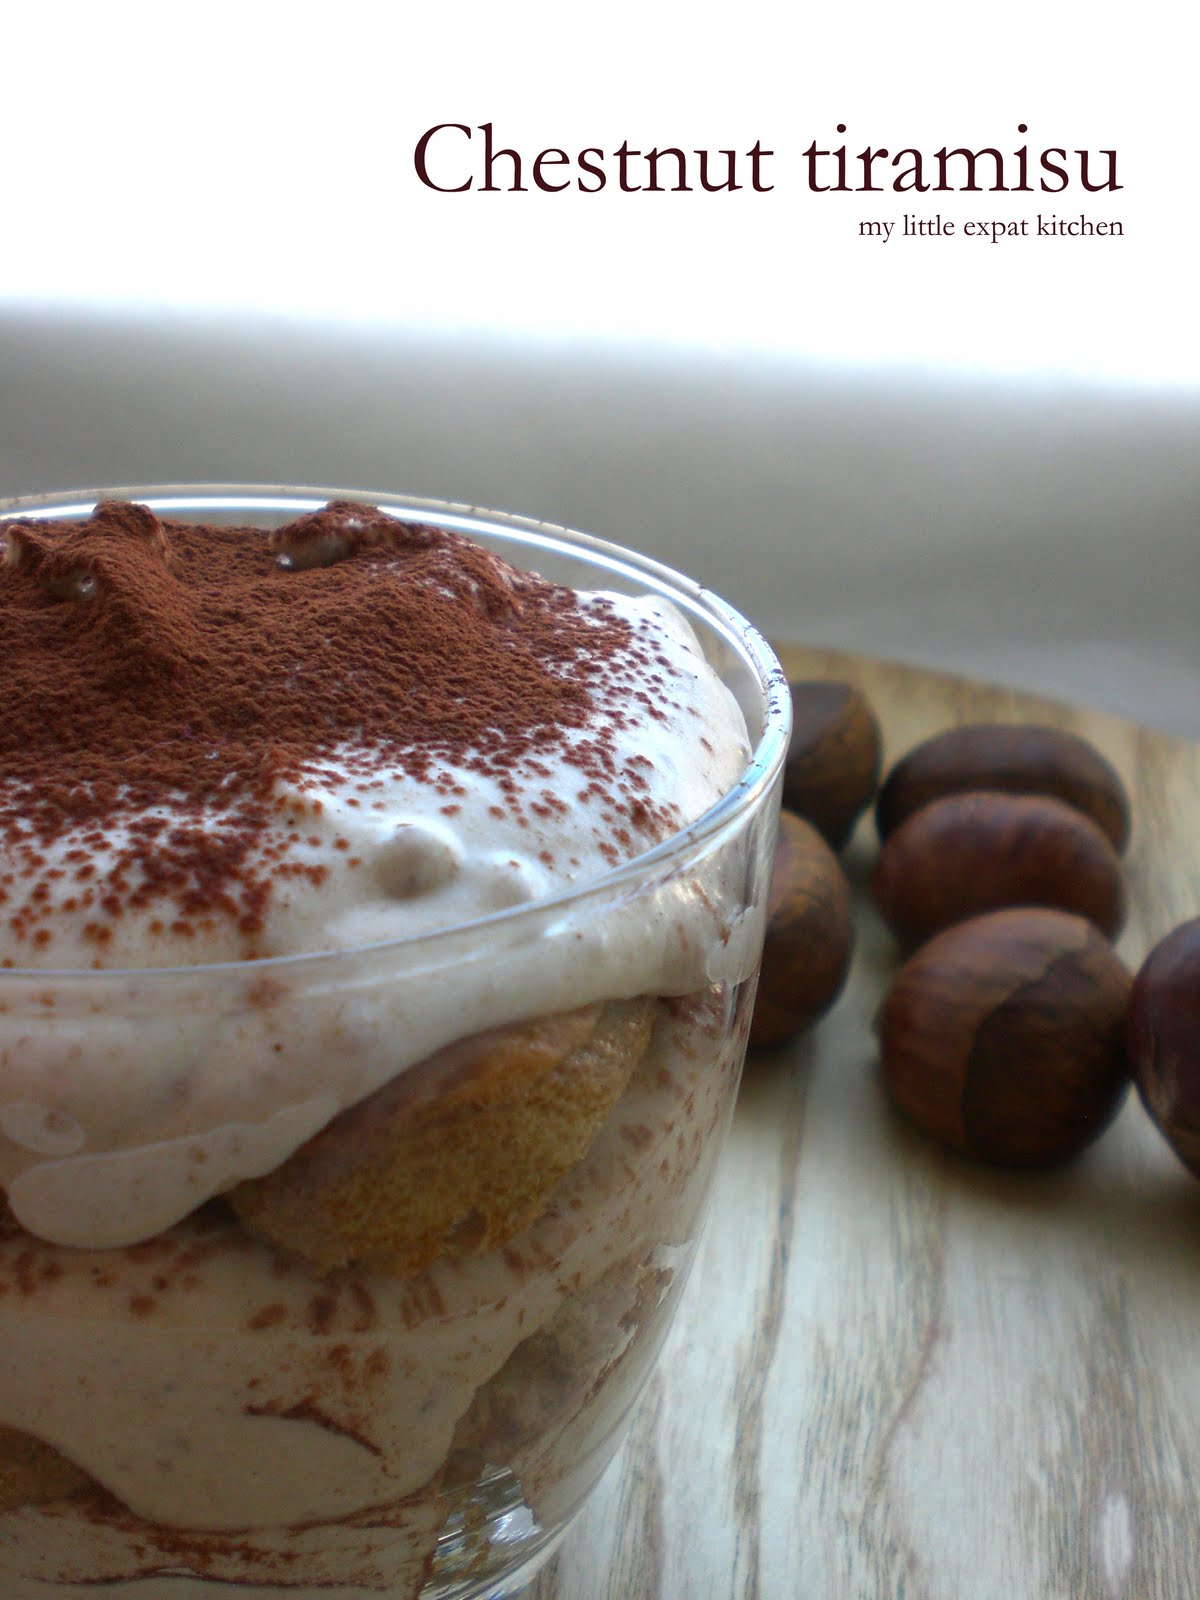 Recipe for Chestnut Puree  Purée de marrons - The Good Life France